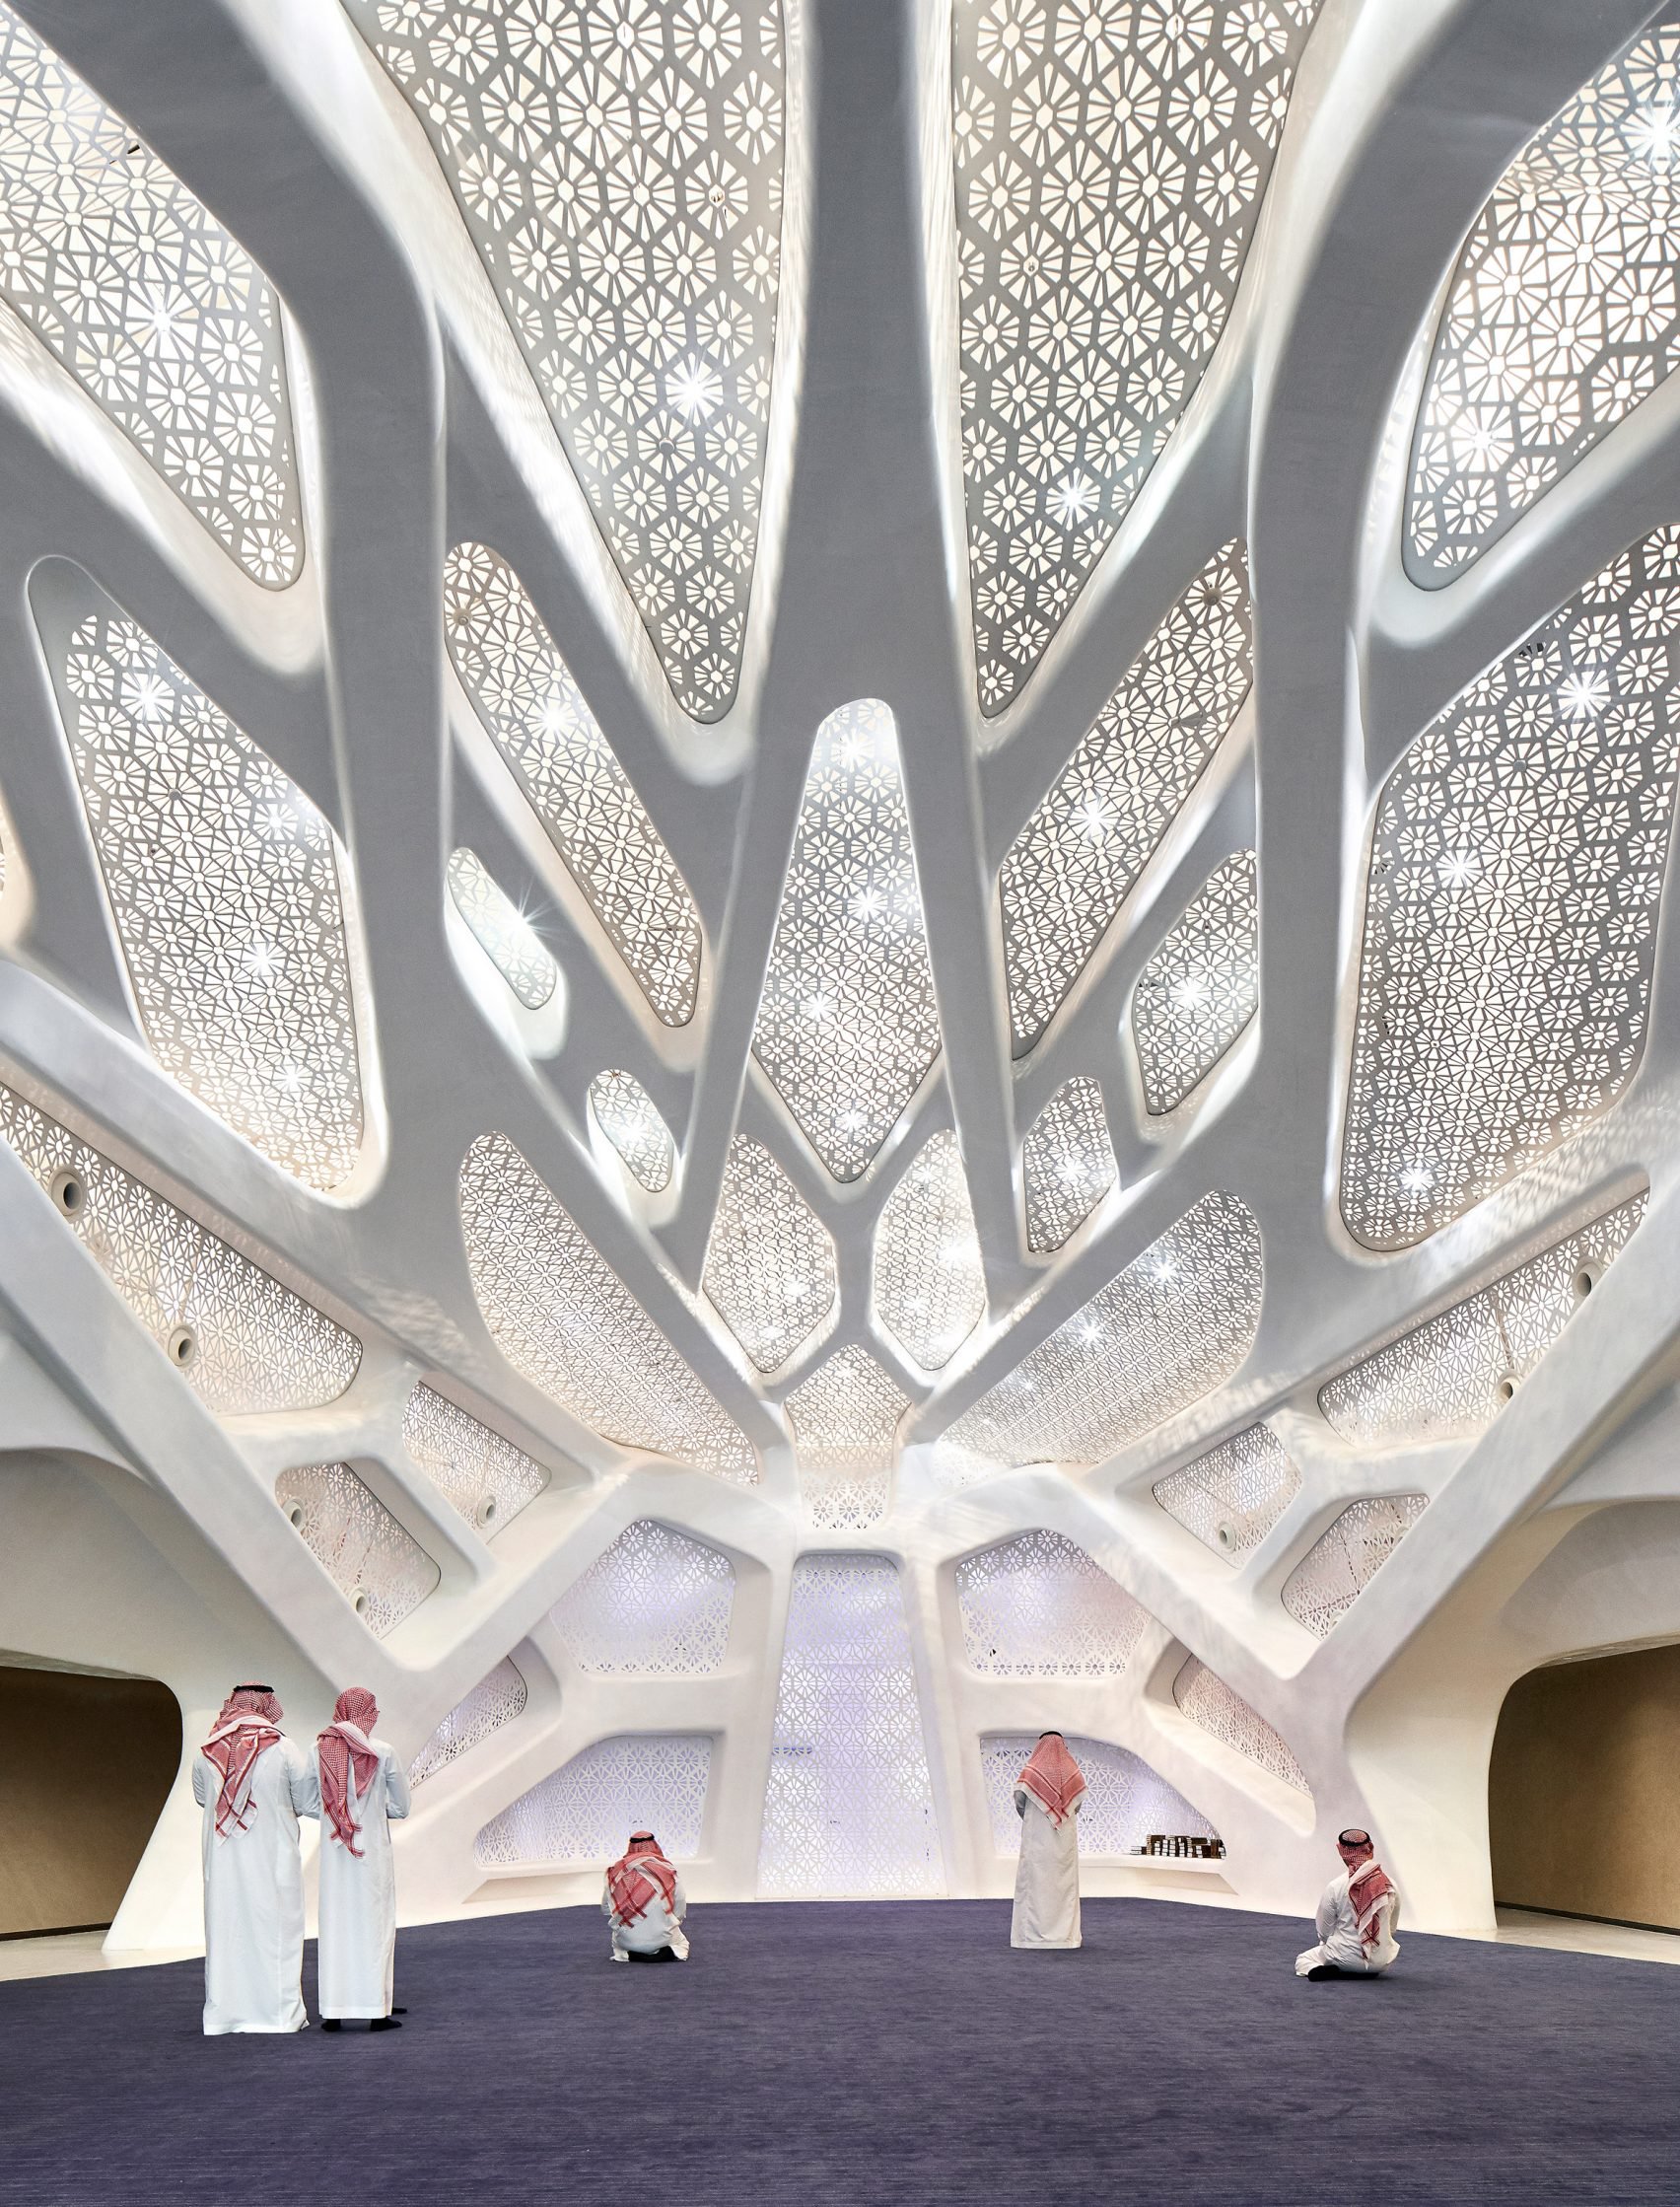 Stunning KAPSARC in Riyadh by Zaha Hadid Architects